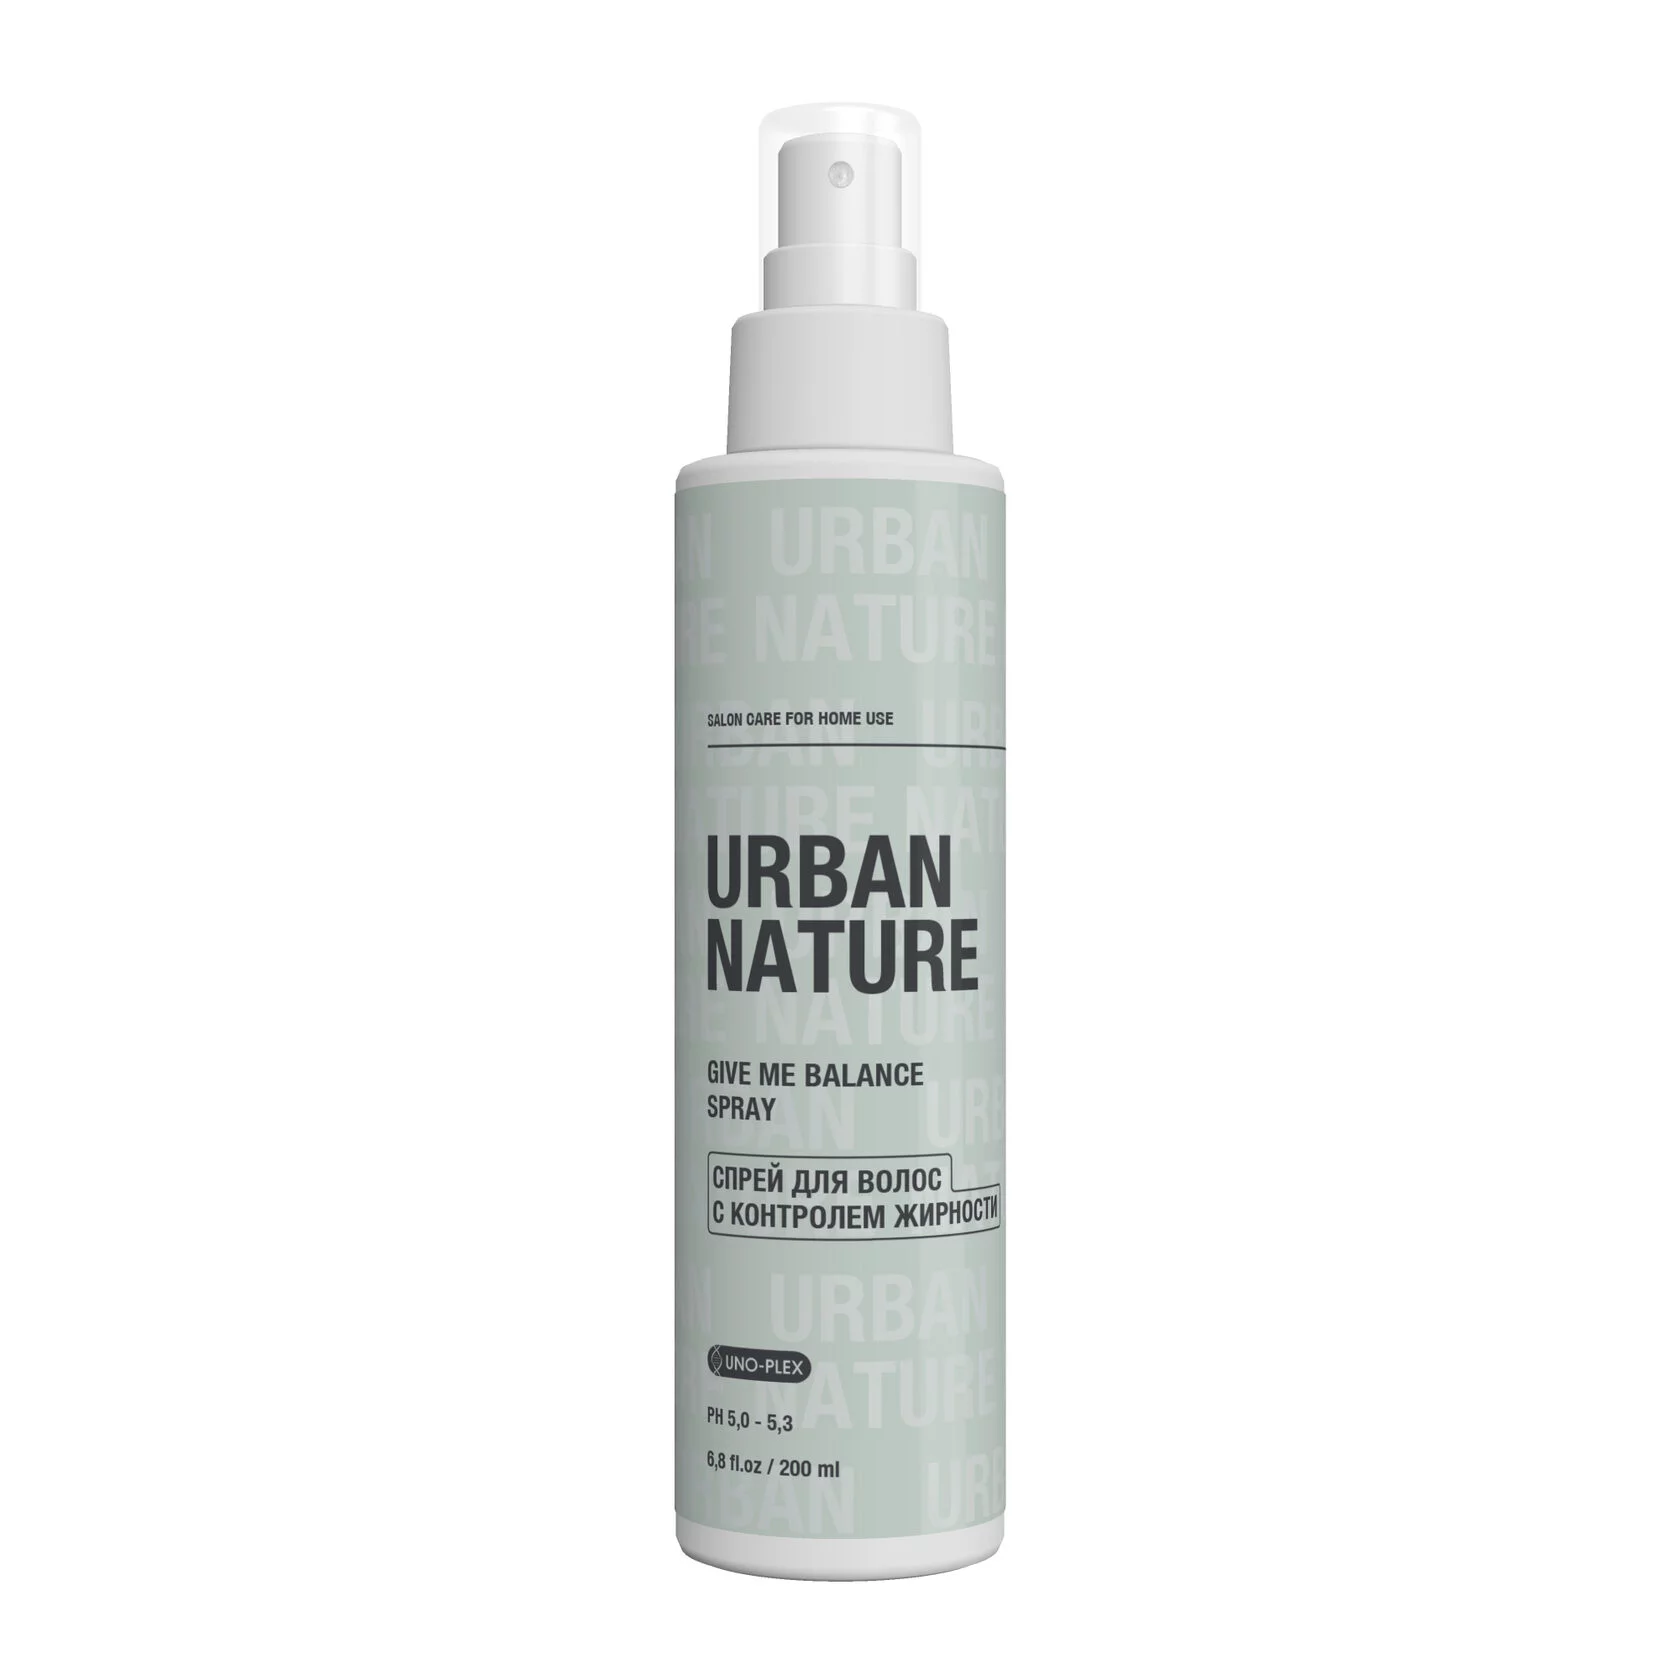 Спрей для волос с контролем жирности Urban Nature Give Me Balance Spray, 200 мл